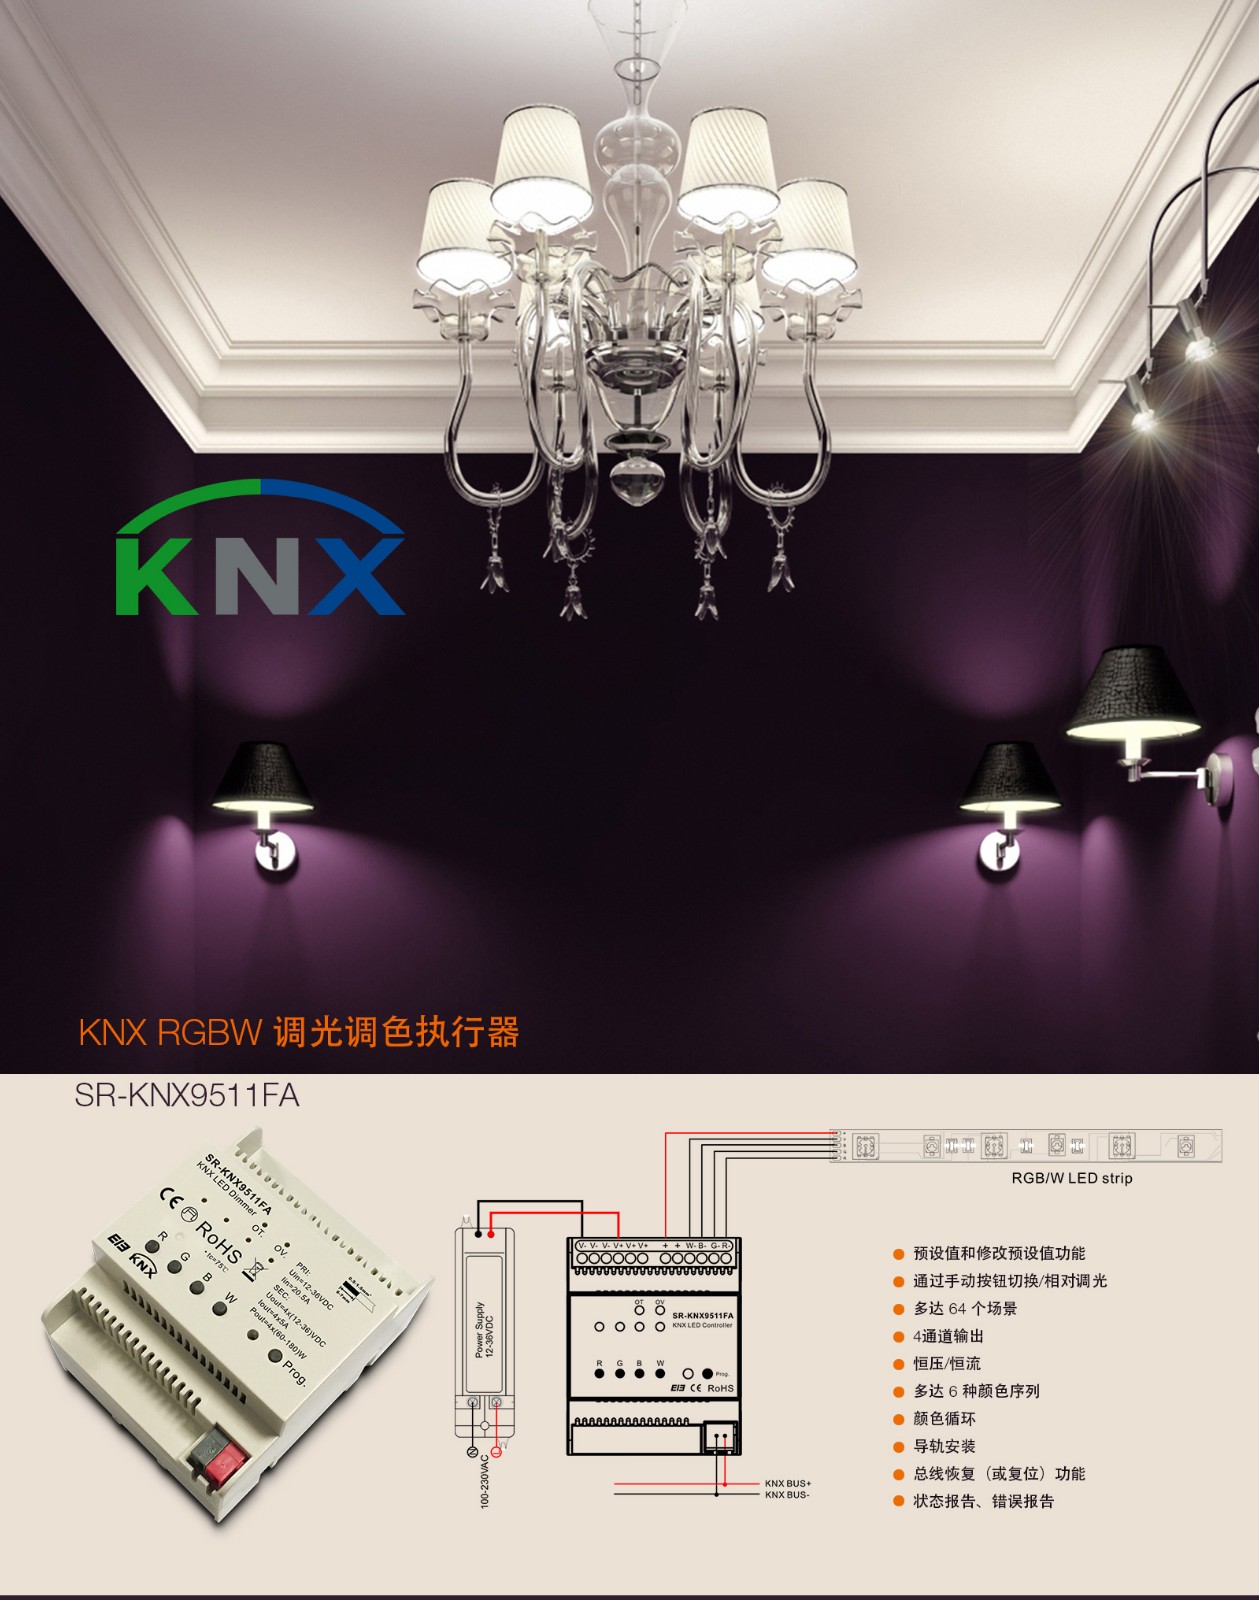 KNX中文推广图-SR-KNX9511FA.jpg